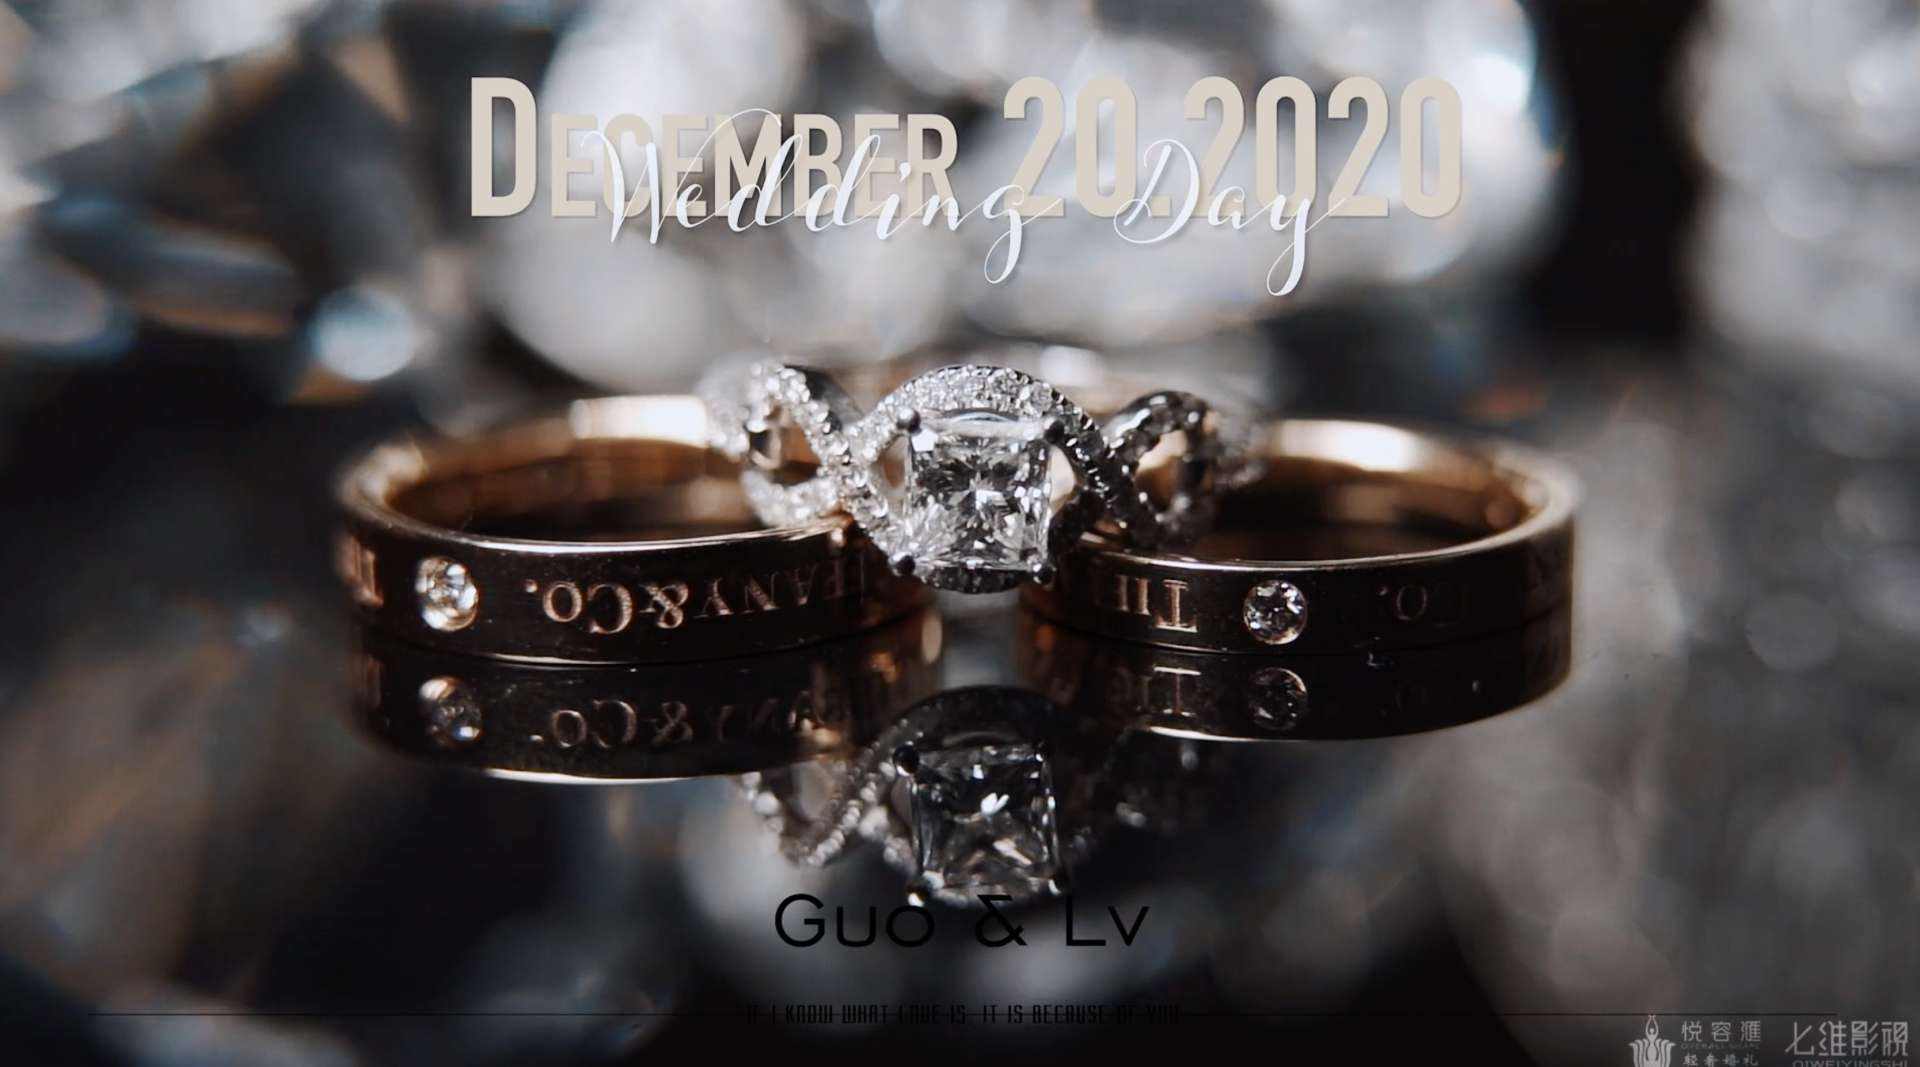 GUO&LV 2020.12.20婚礼现场快剪